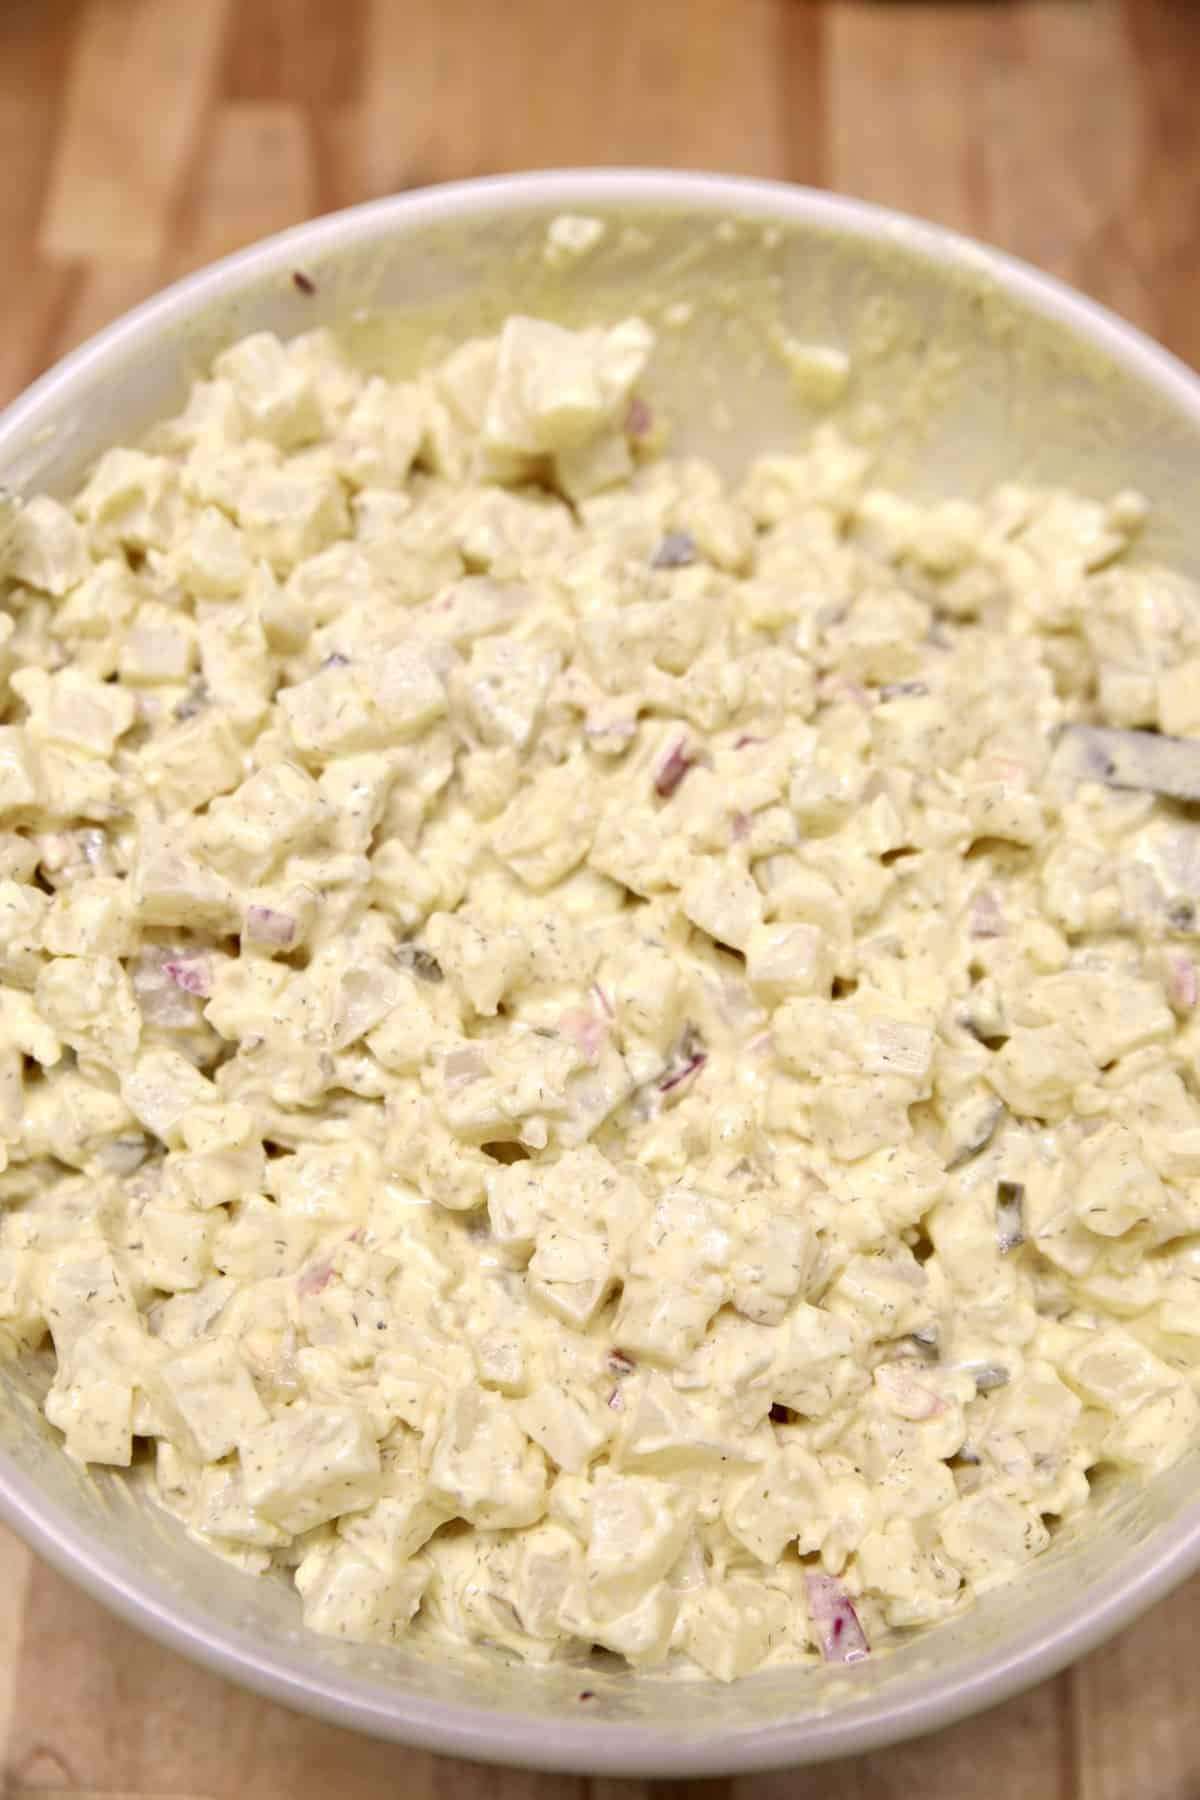 Bowl of potato salad.